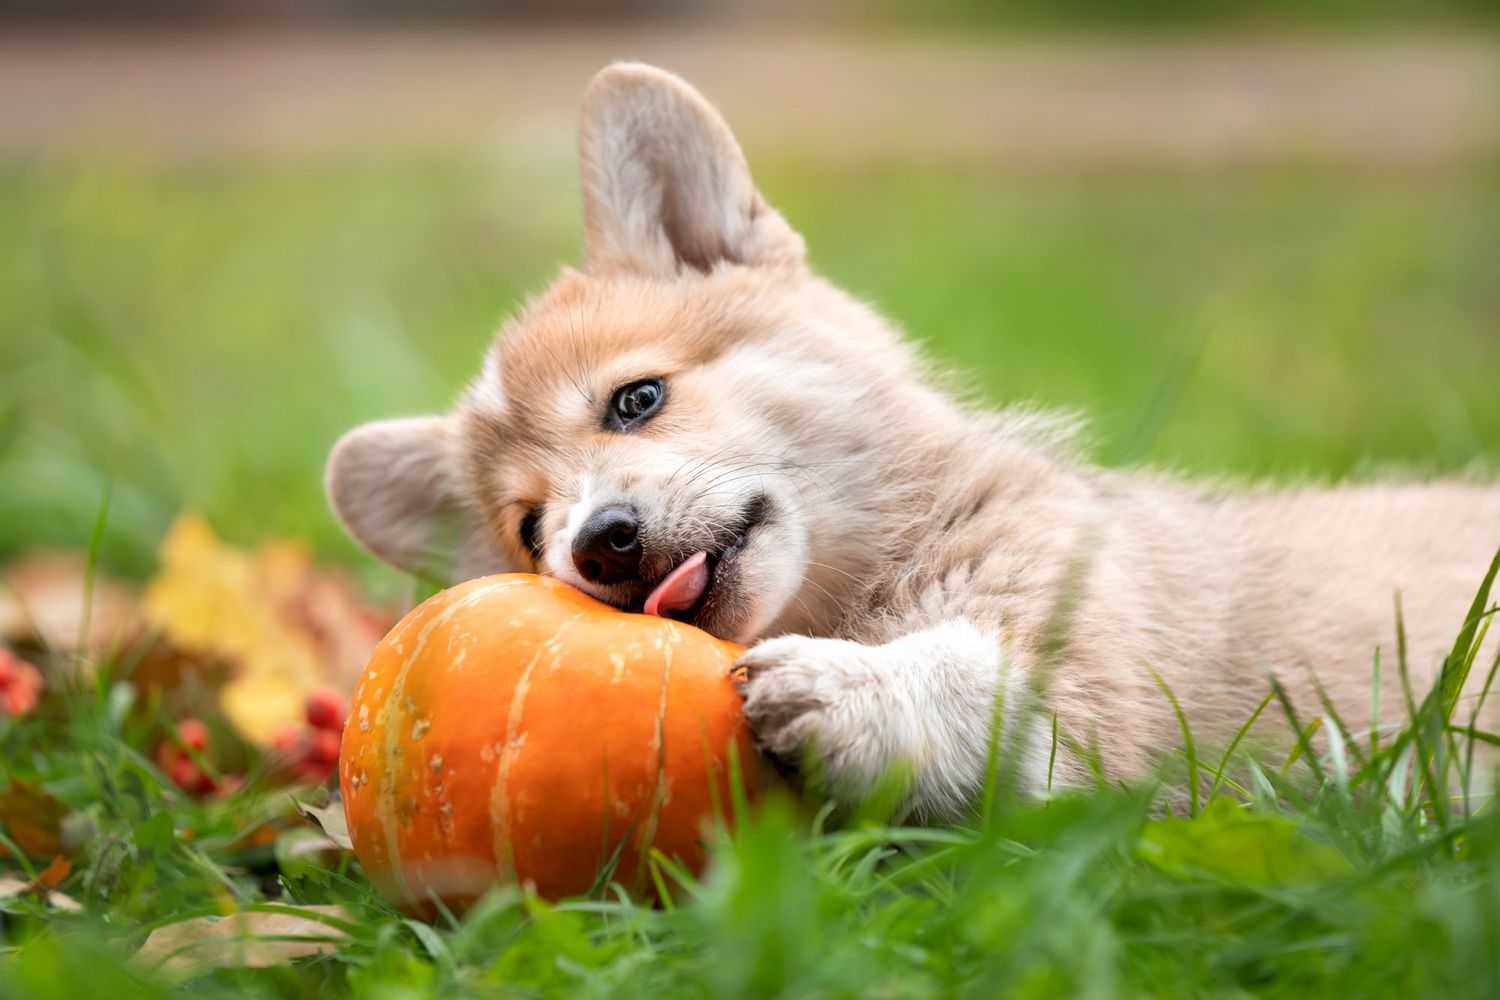 corgi puppy chewing on pumpkin stem